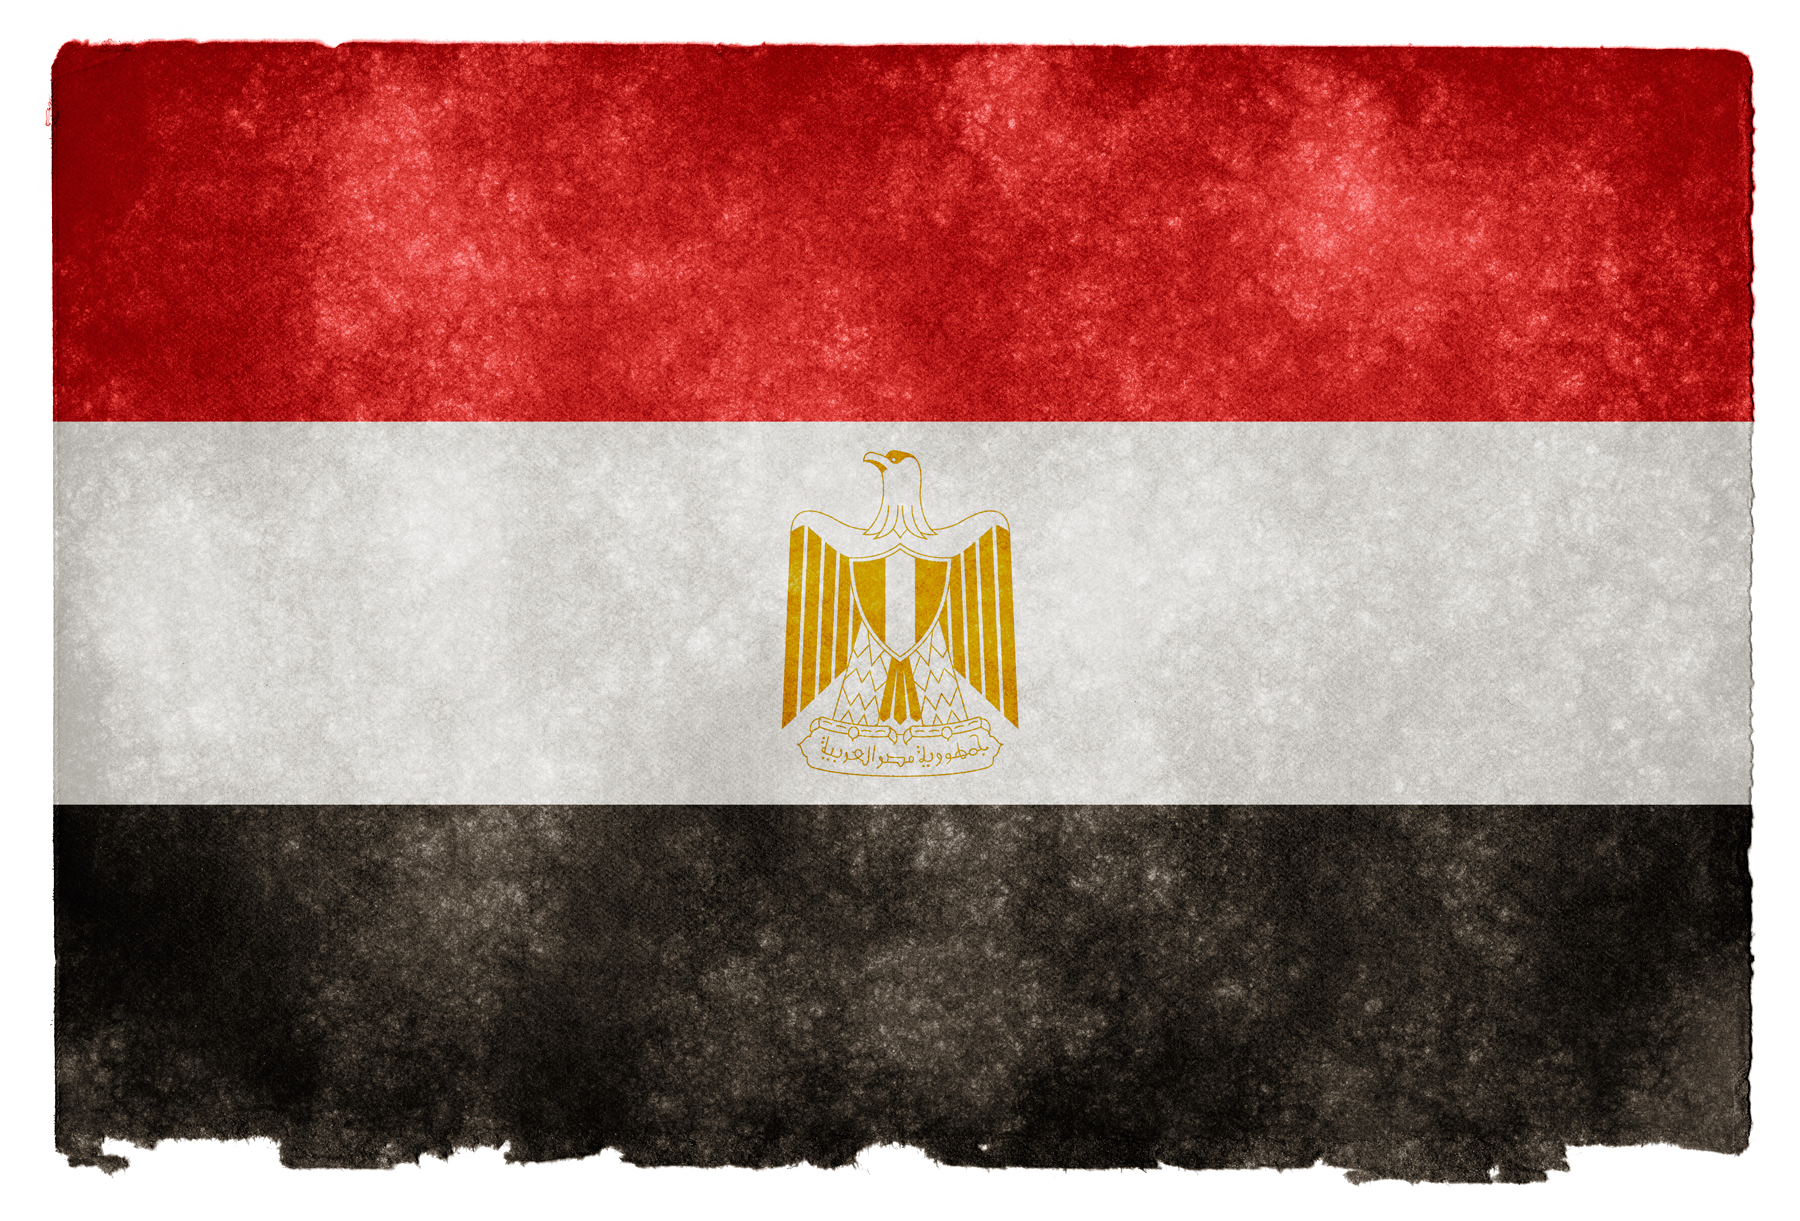 Egypt grunge flag photo